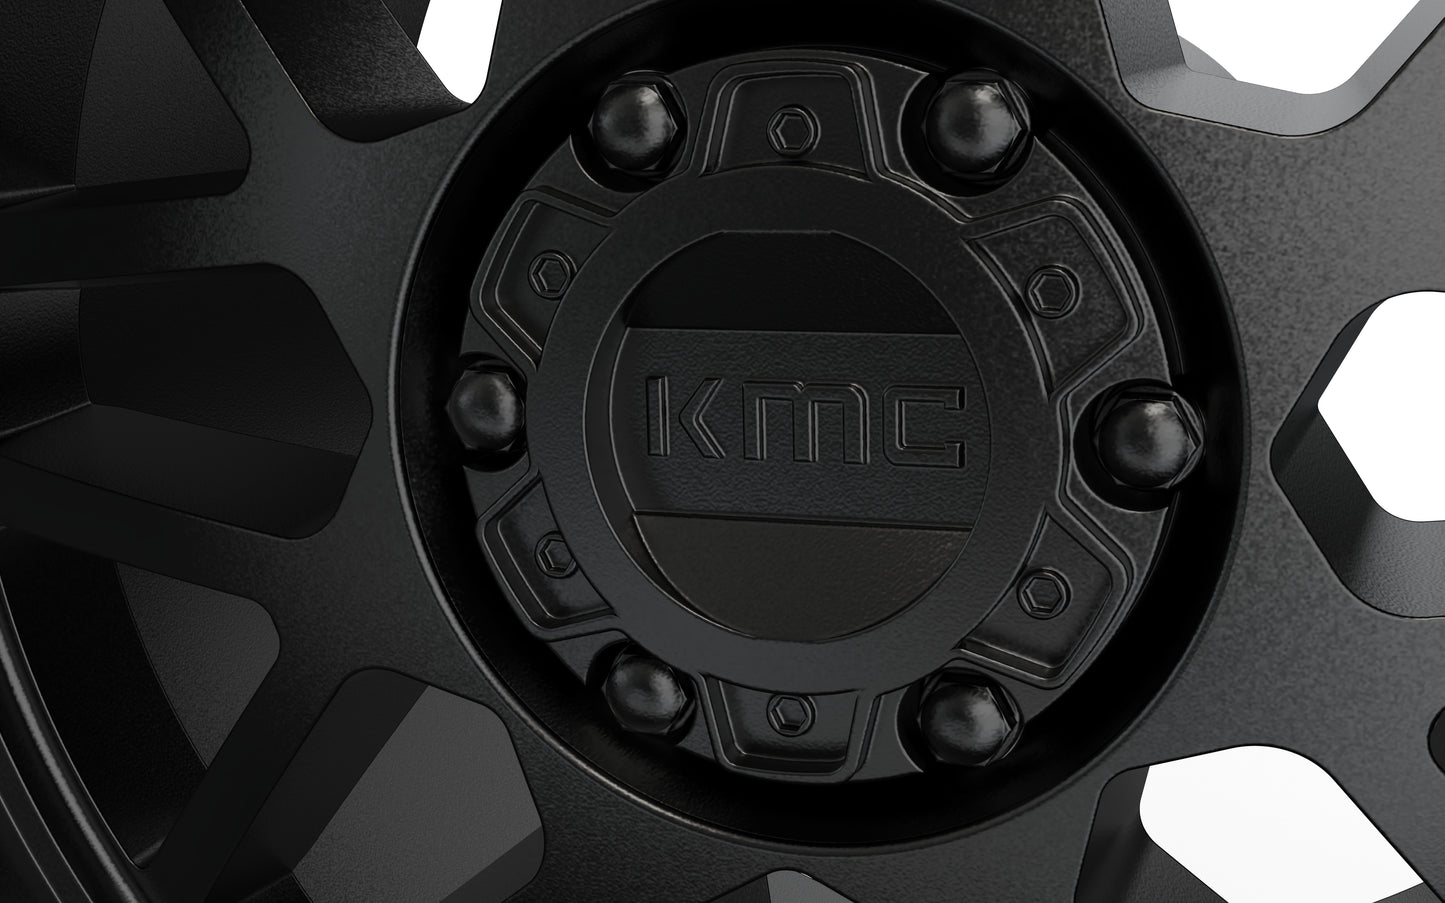 kmc GRENADE OFF-ROAD wheel 3D MODEL